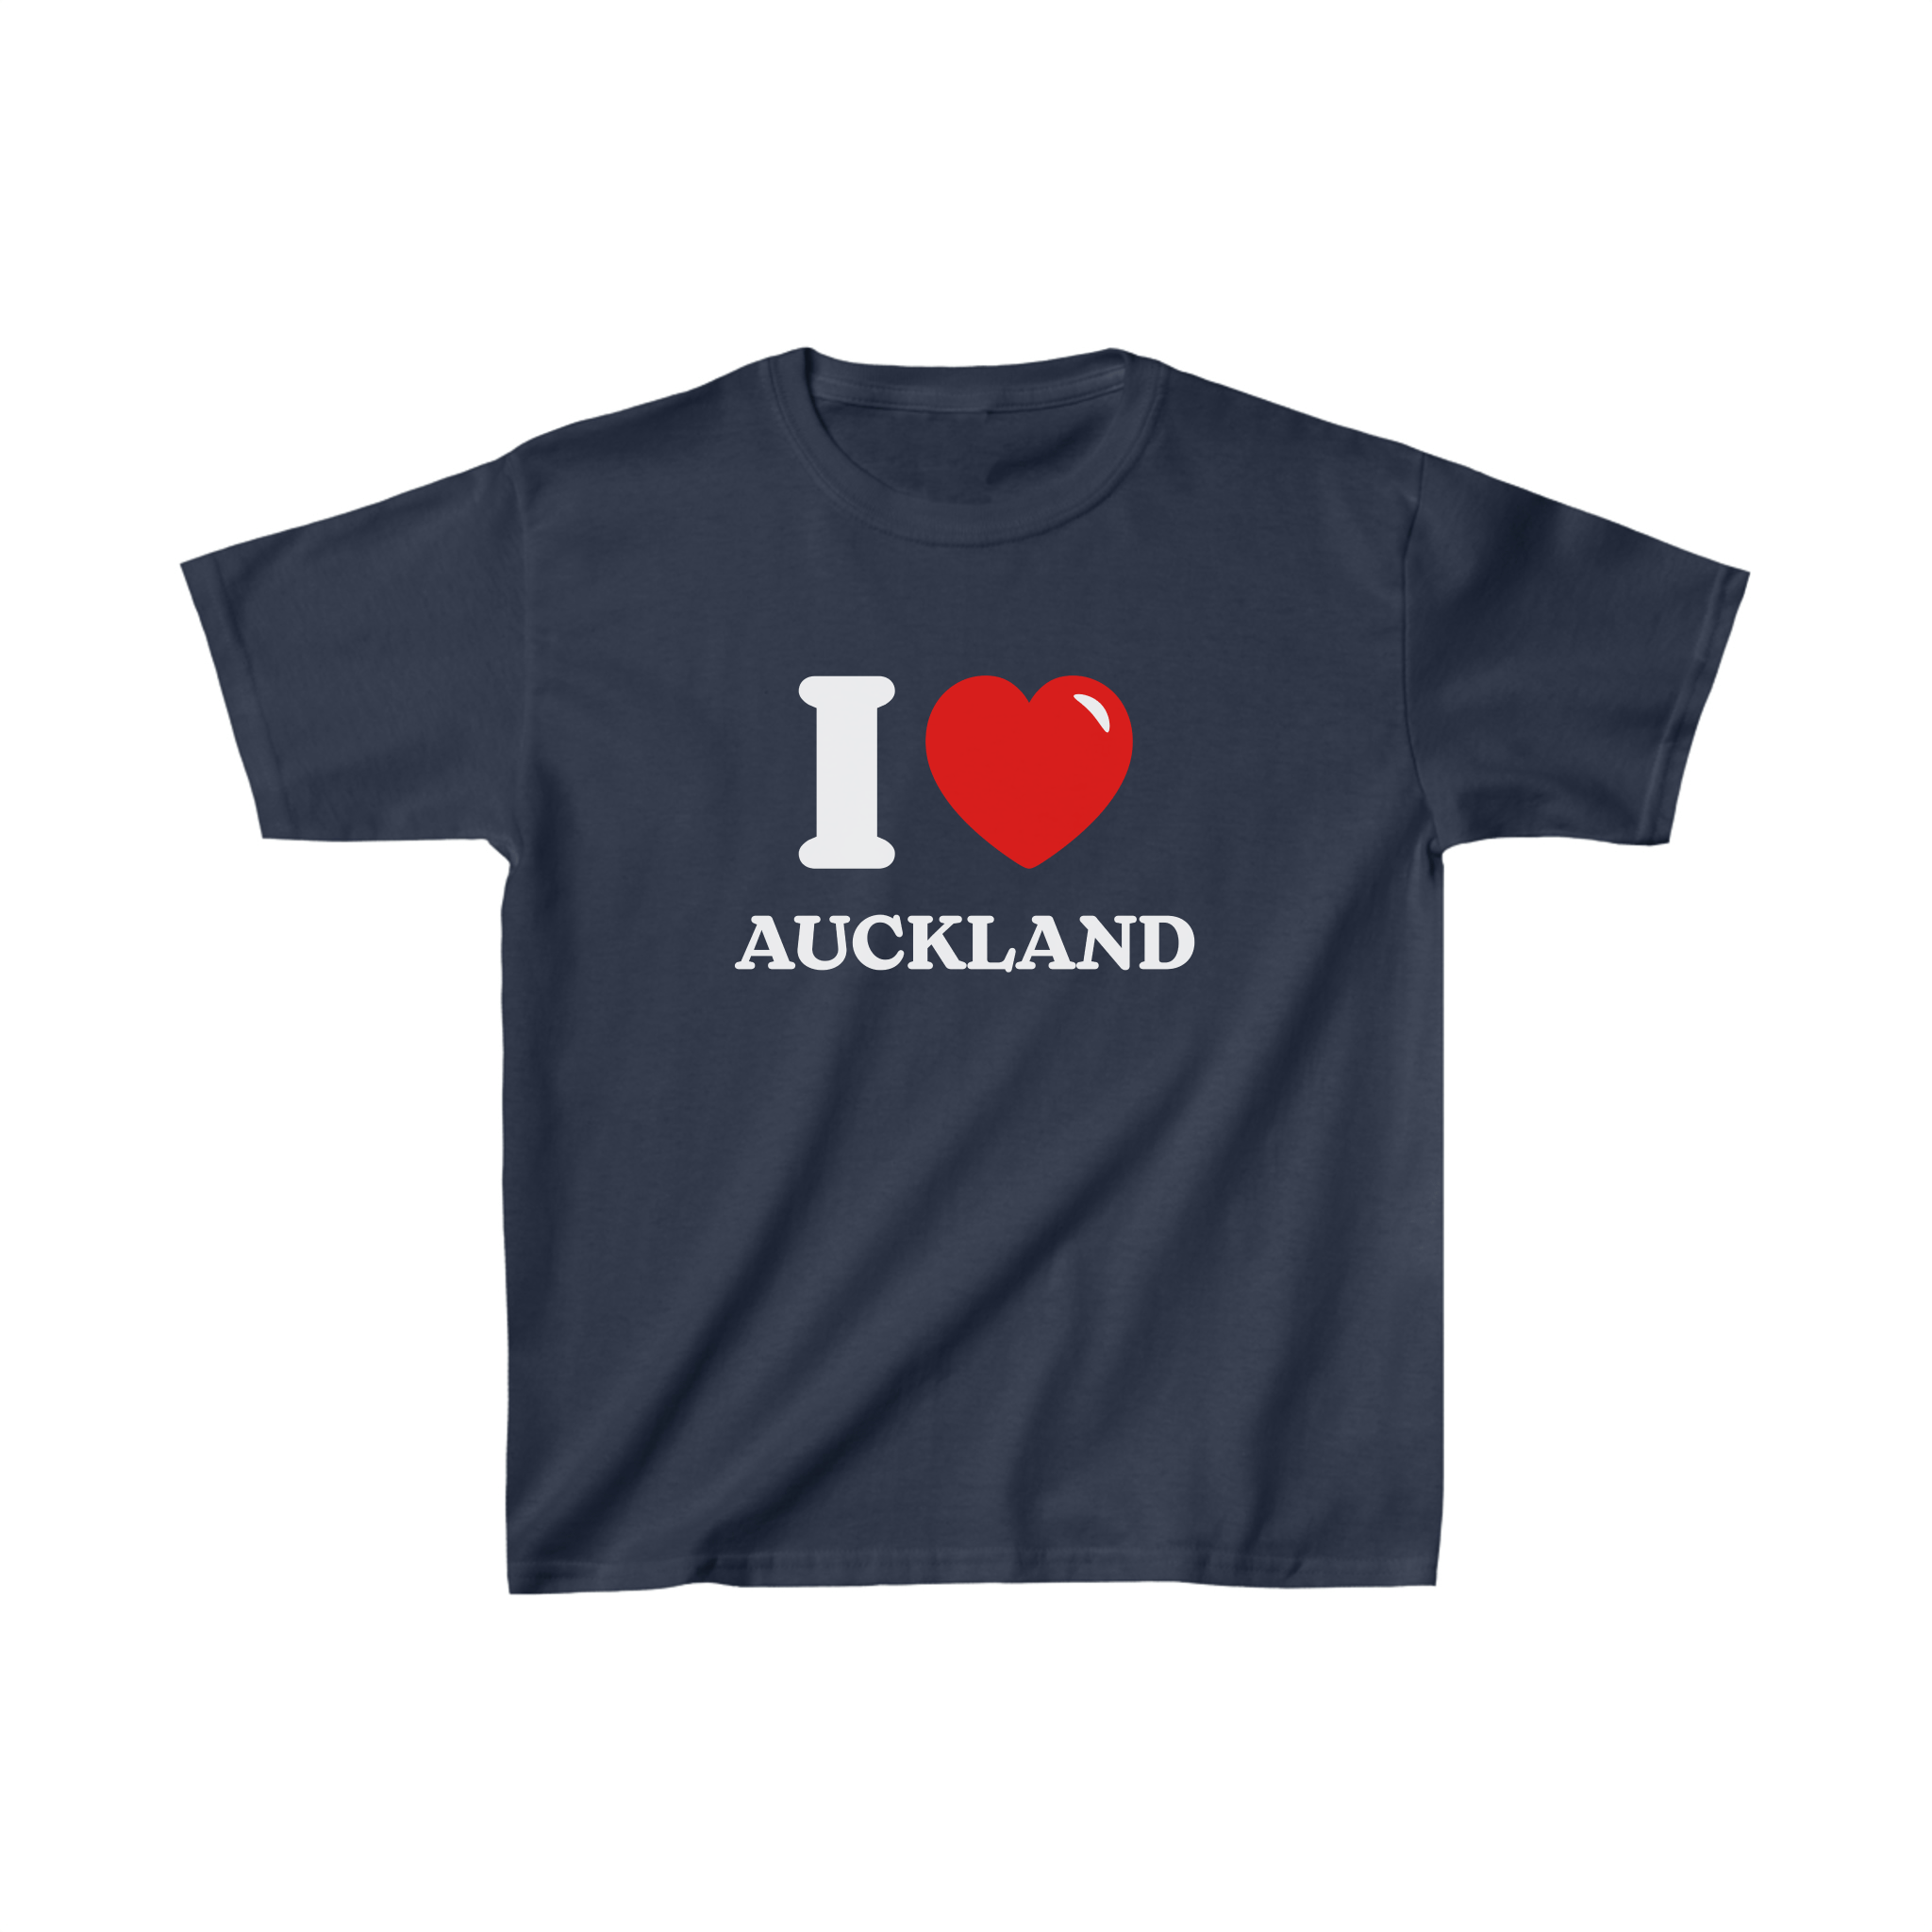 'I love Auckland' baby tee - In Print We Trust